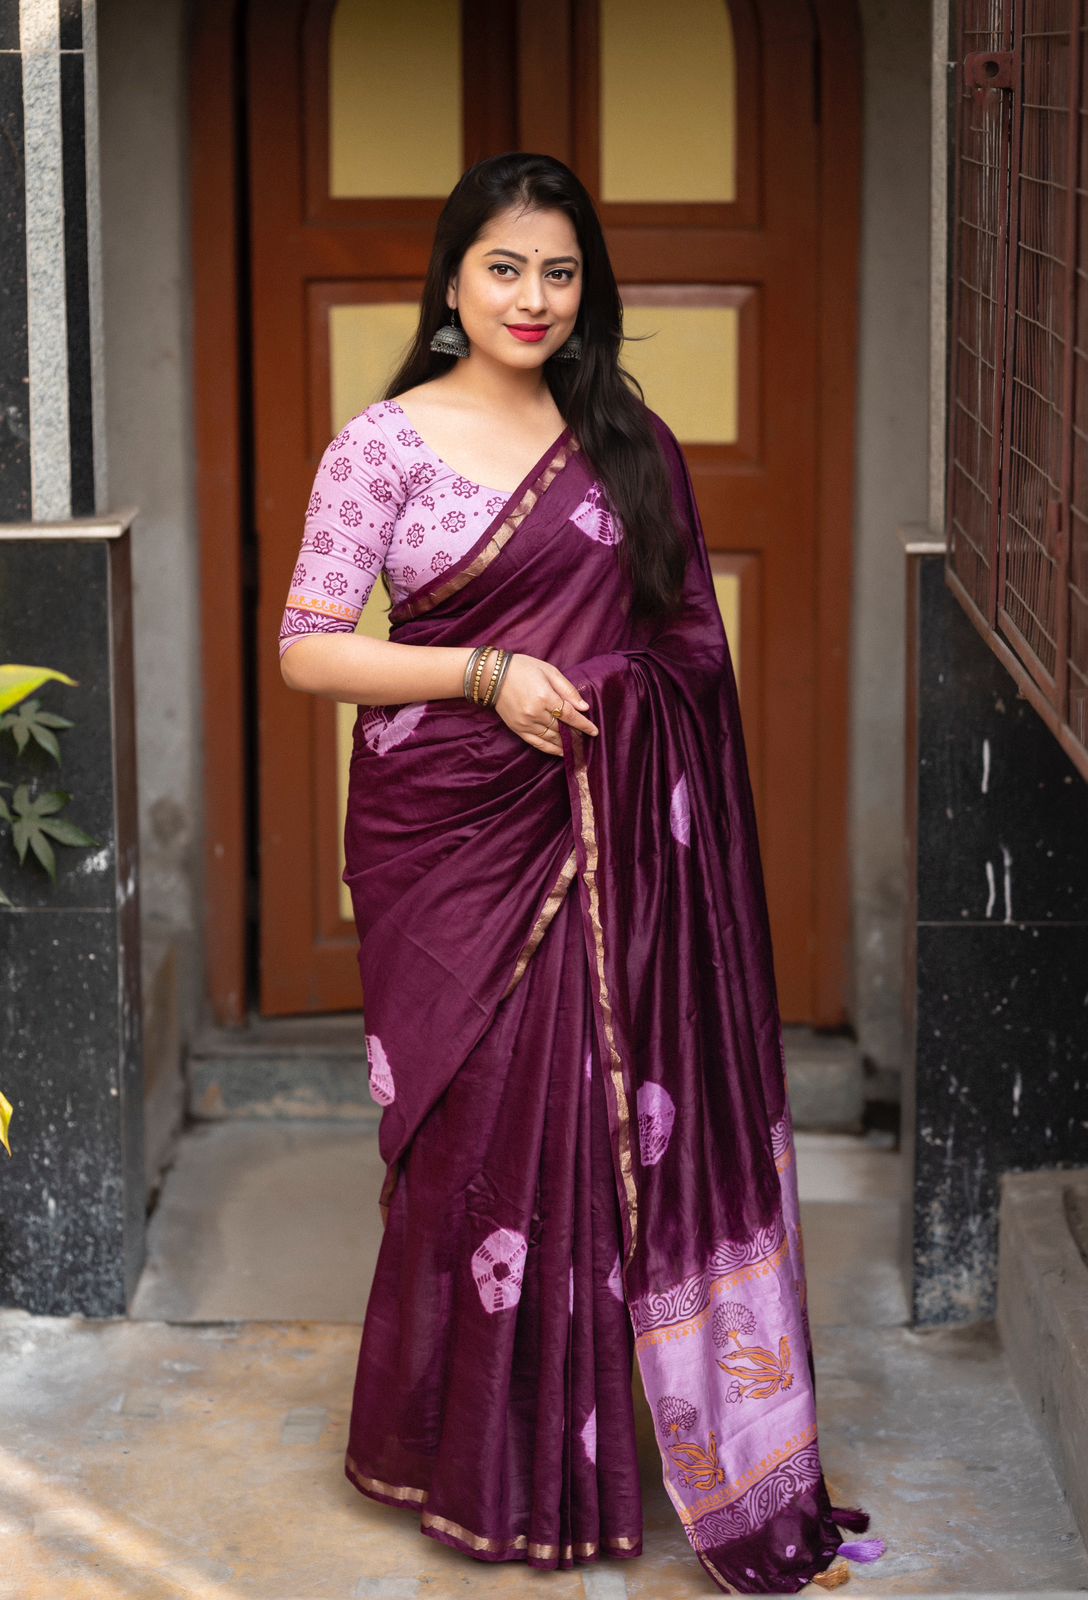 "Exquisite Shibori Cotton Saree: Handcrafted Elegance in Pure Chanderi Cotton"